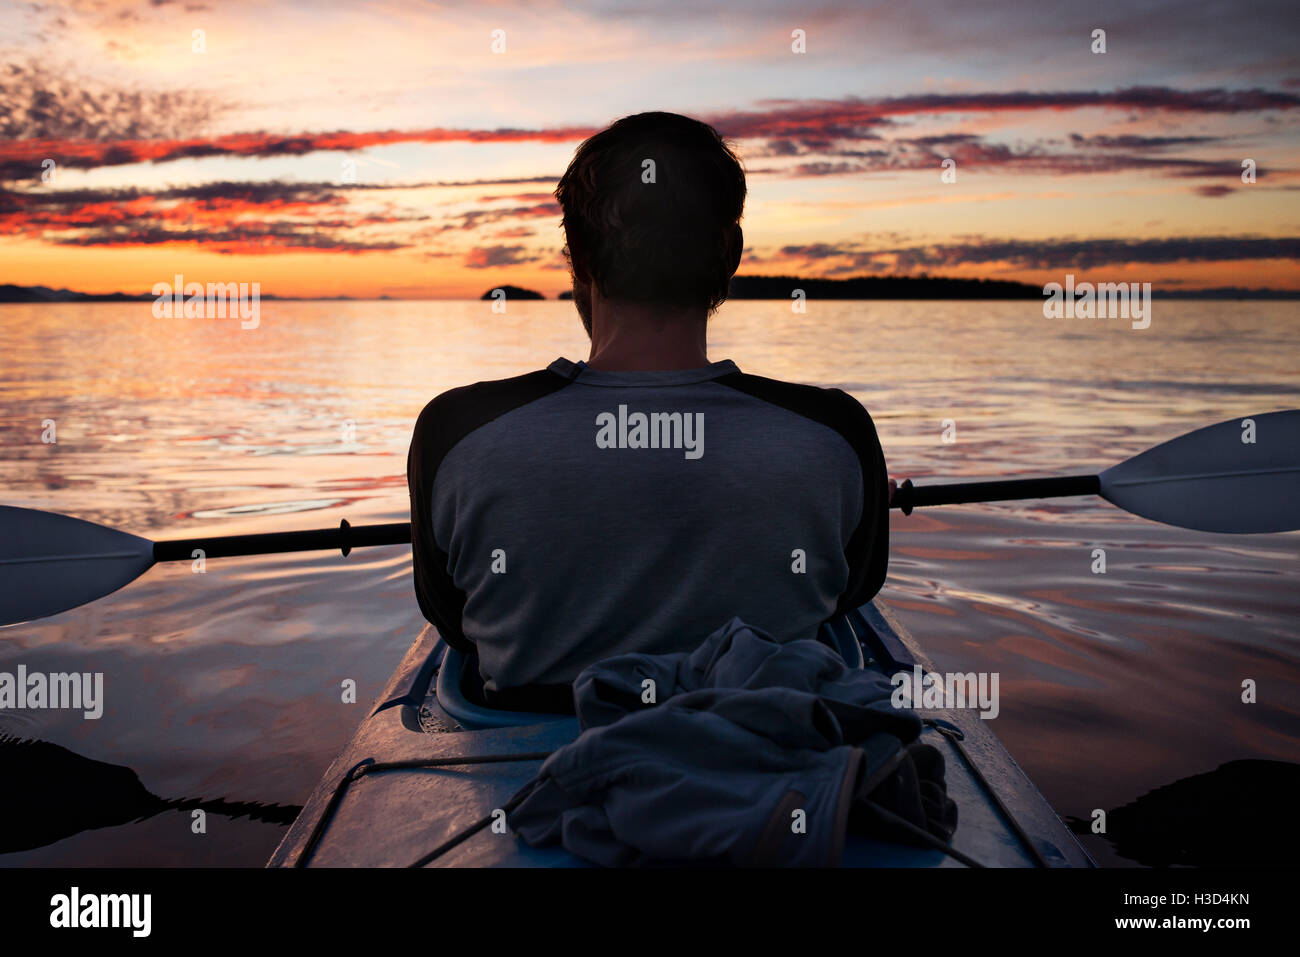 Rear view of man relaxing on kayak during sunset Stock Photo